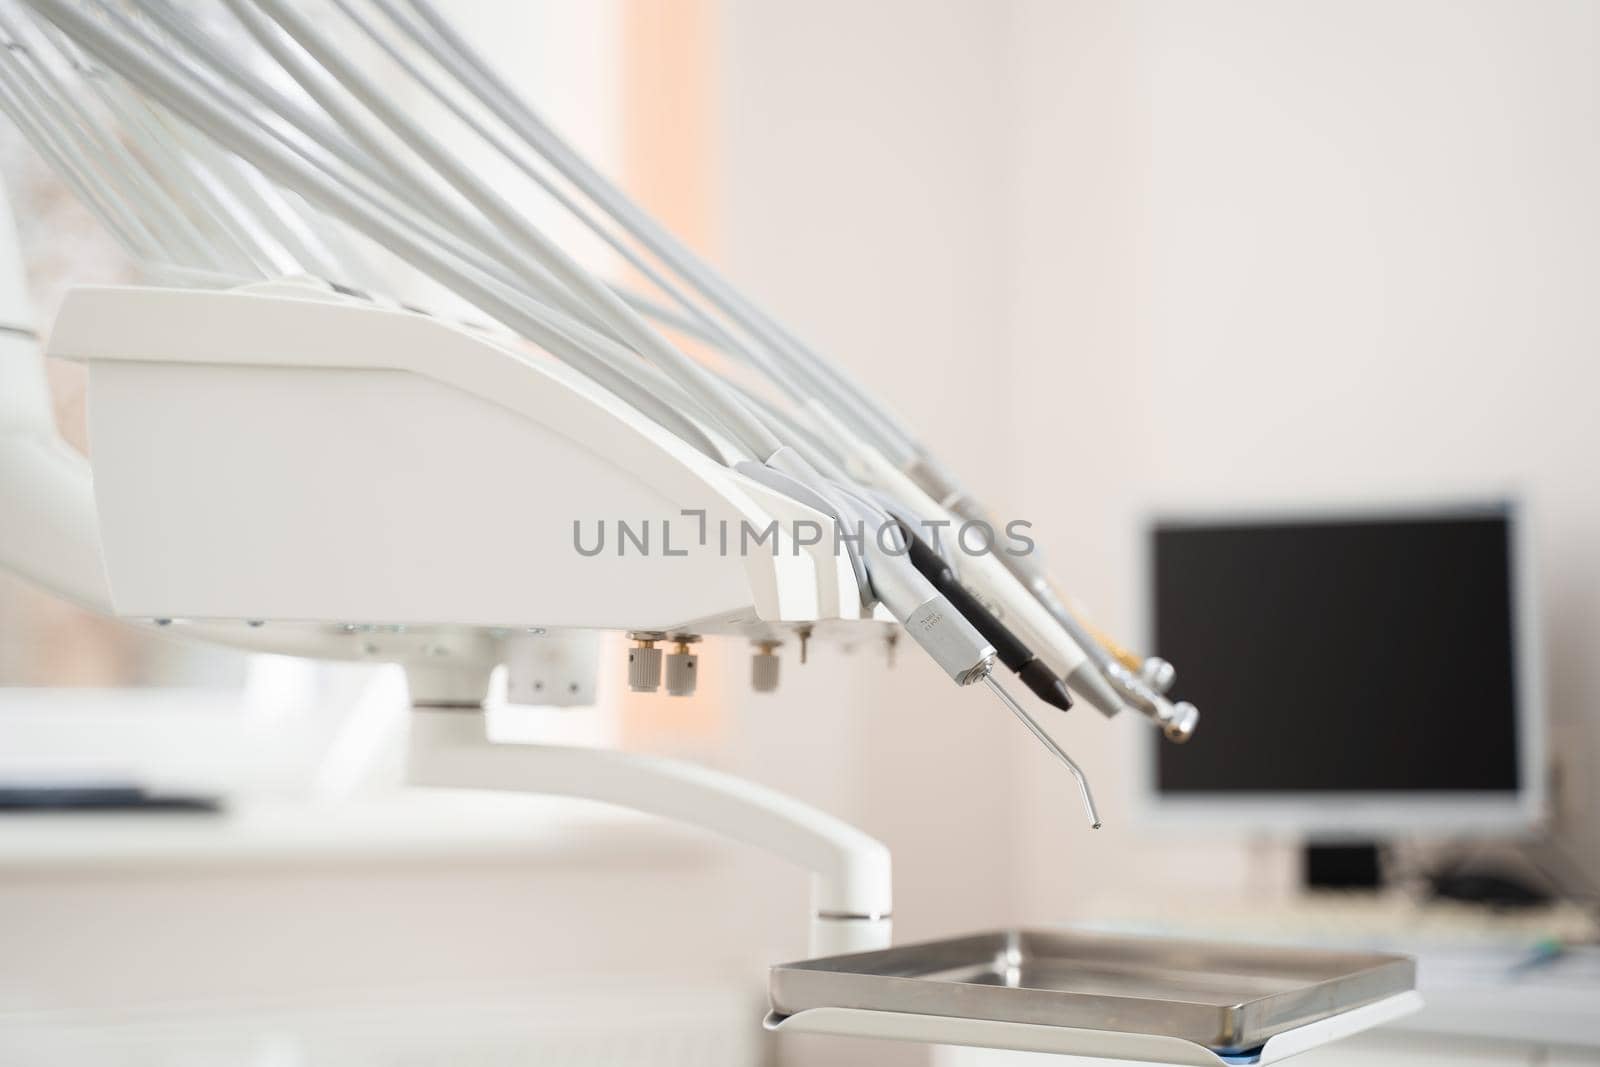 Dental equipment for dentist. Stomatology instruments. Medical drill